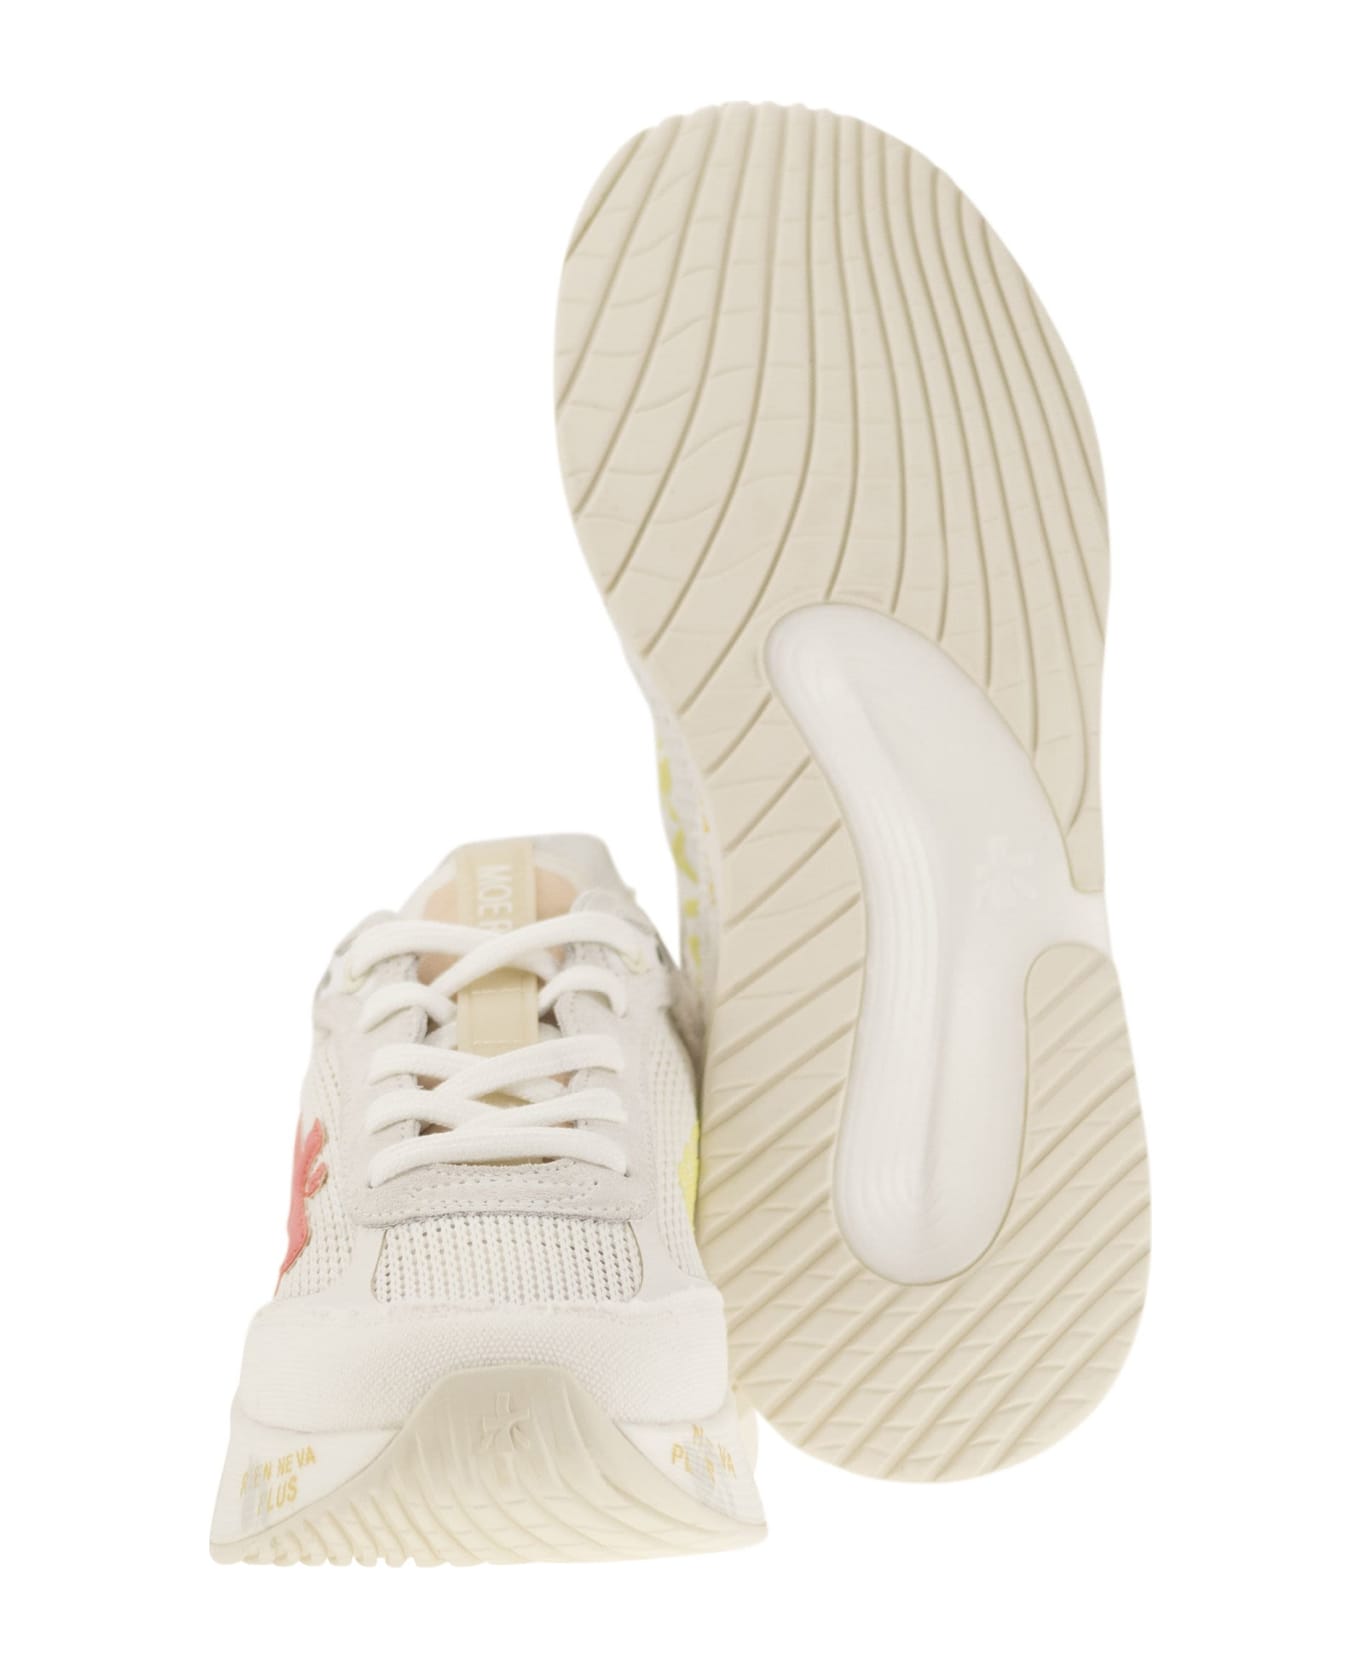 Premiata 'moerund' Sneakers - White/pink